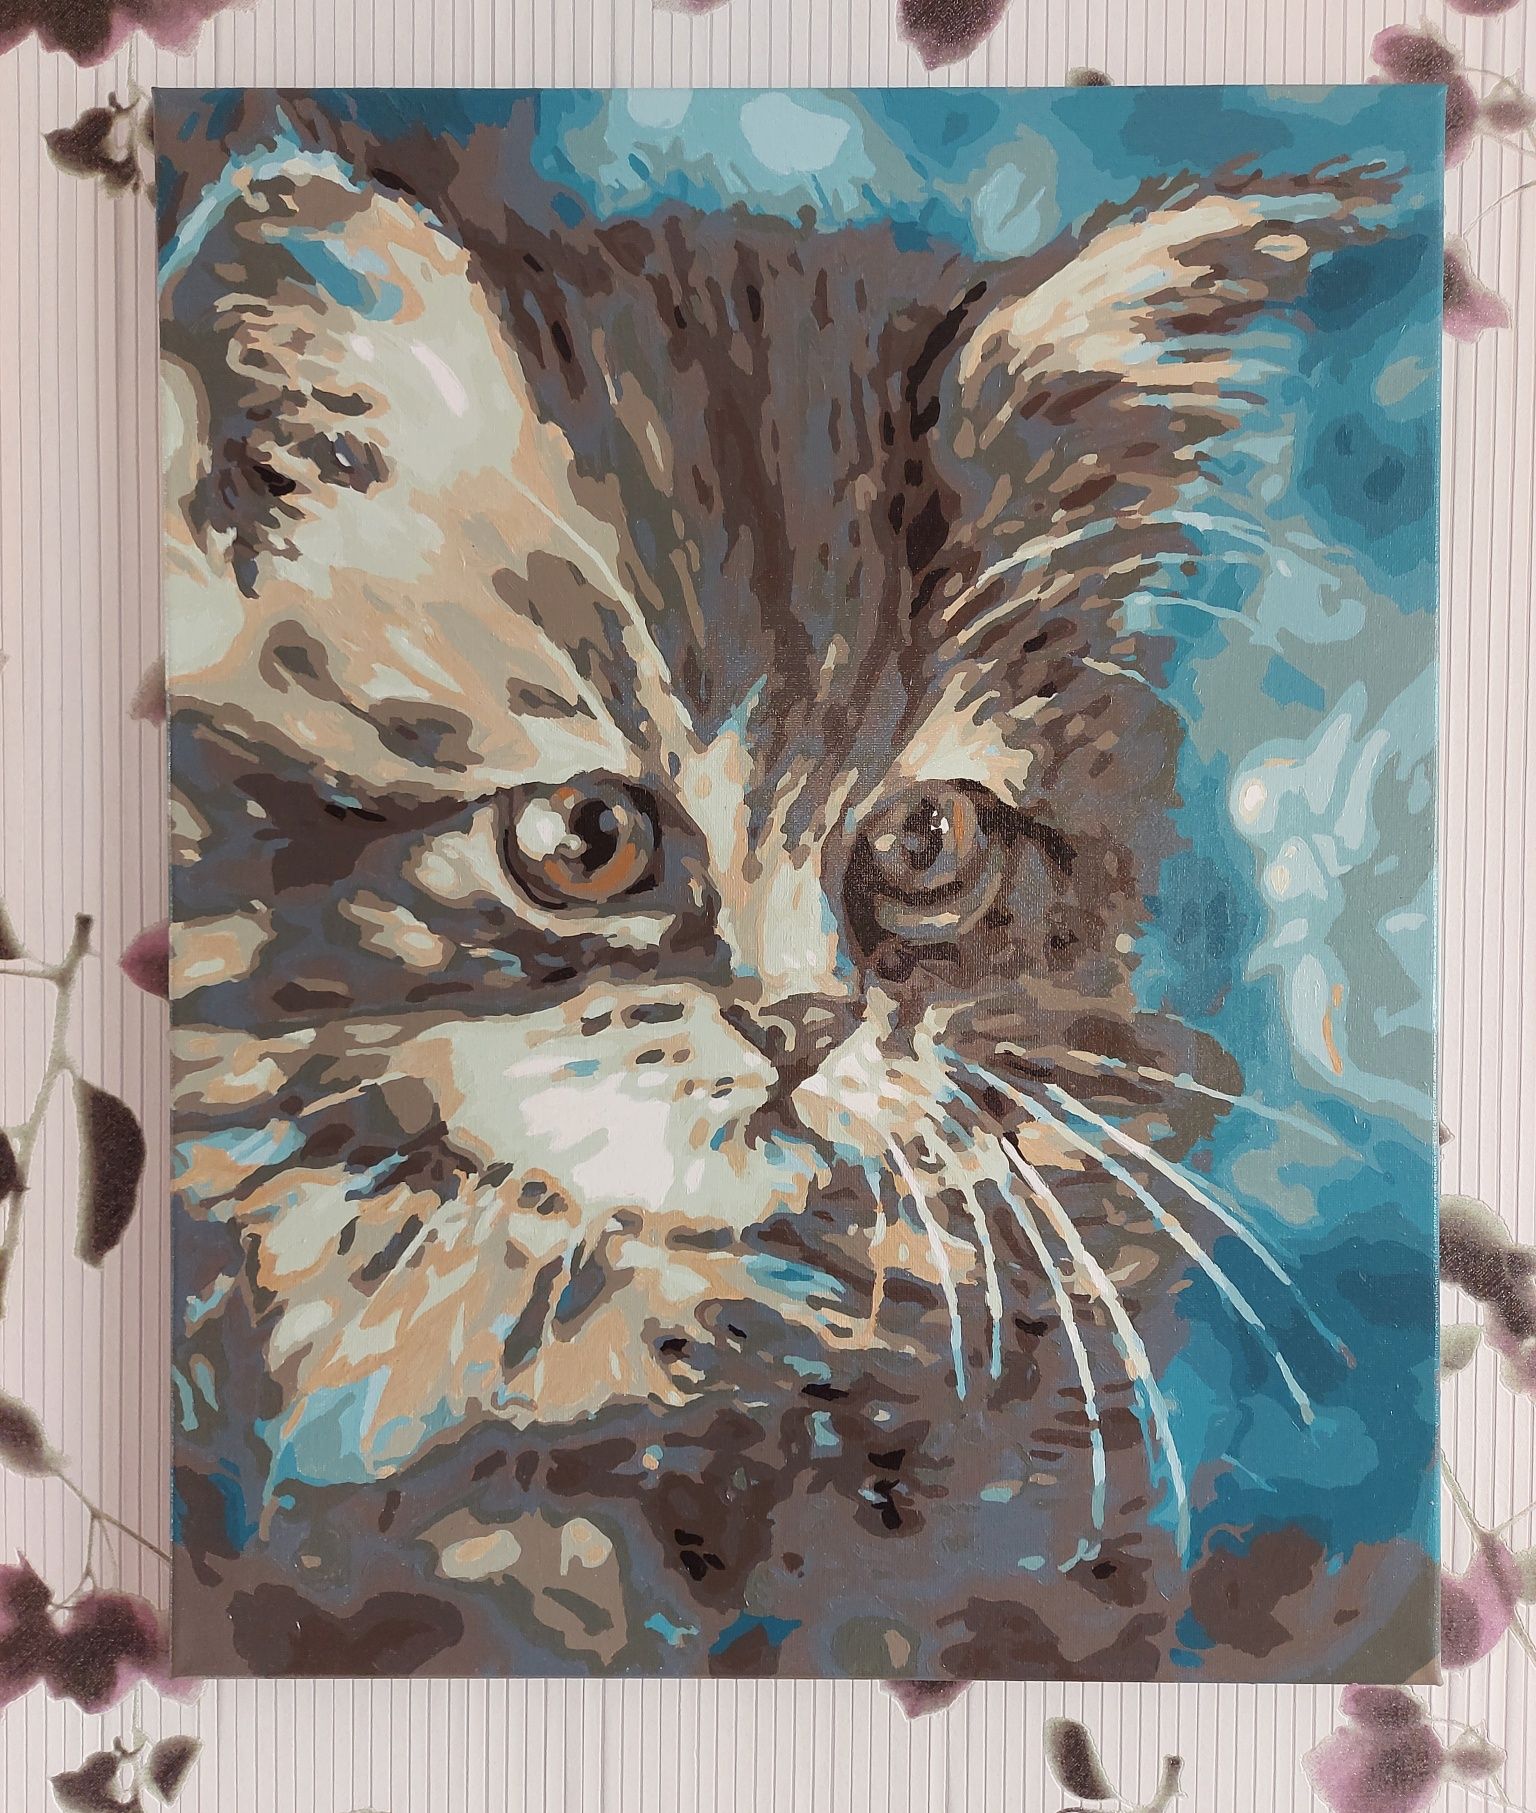 Картина "Котёнок" . Живопись акрилом на холсте.